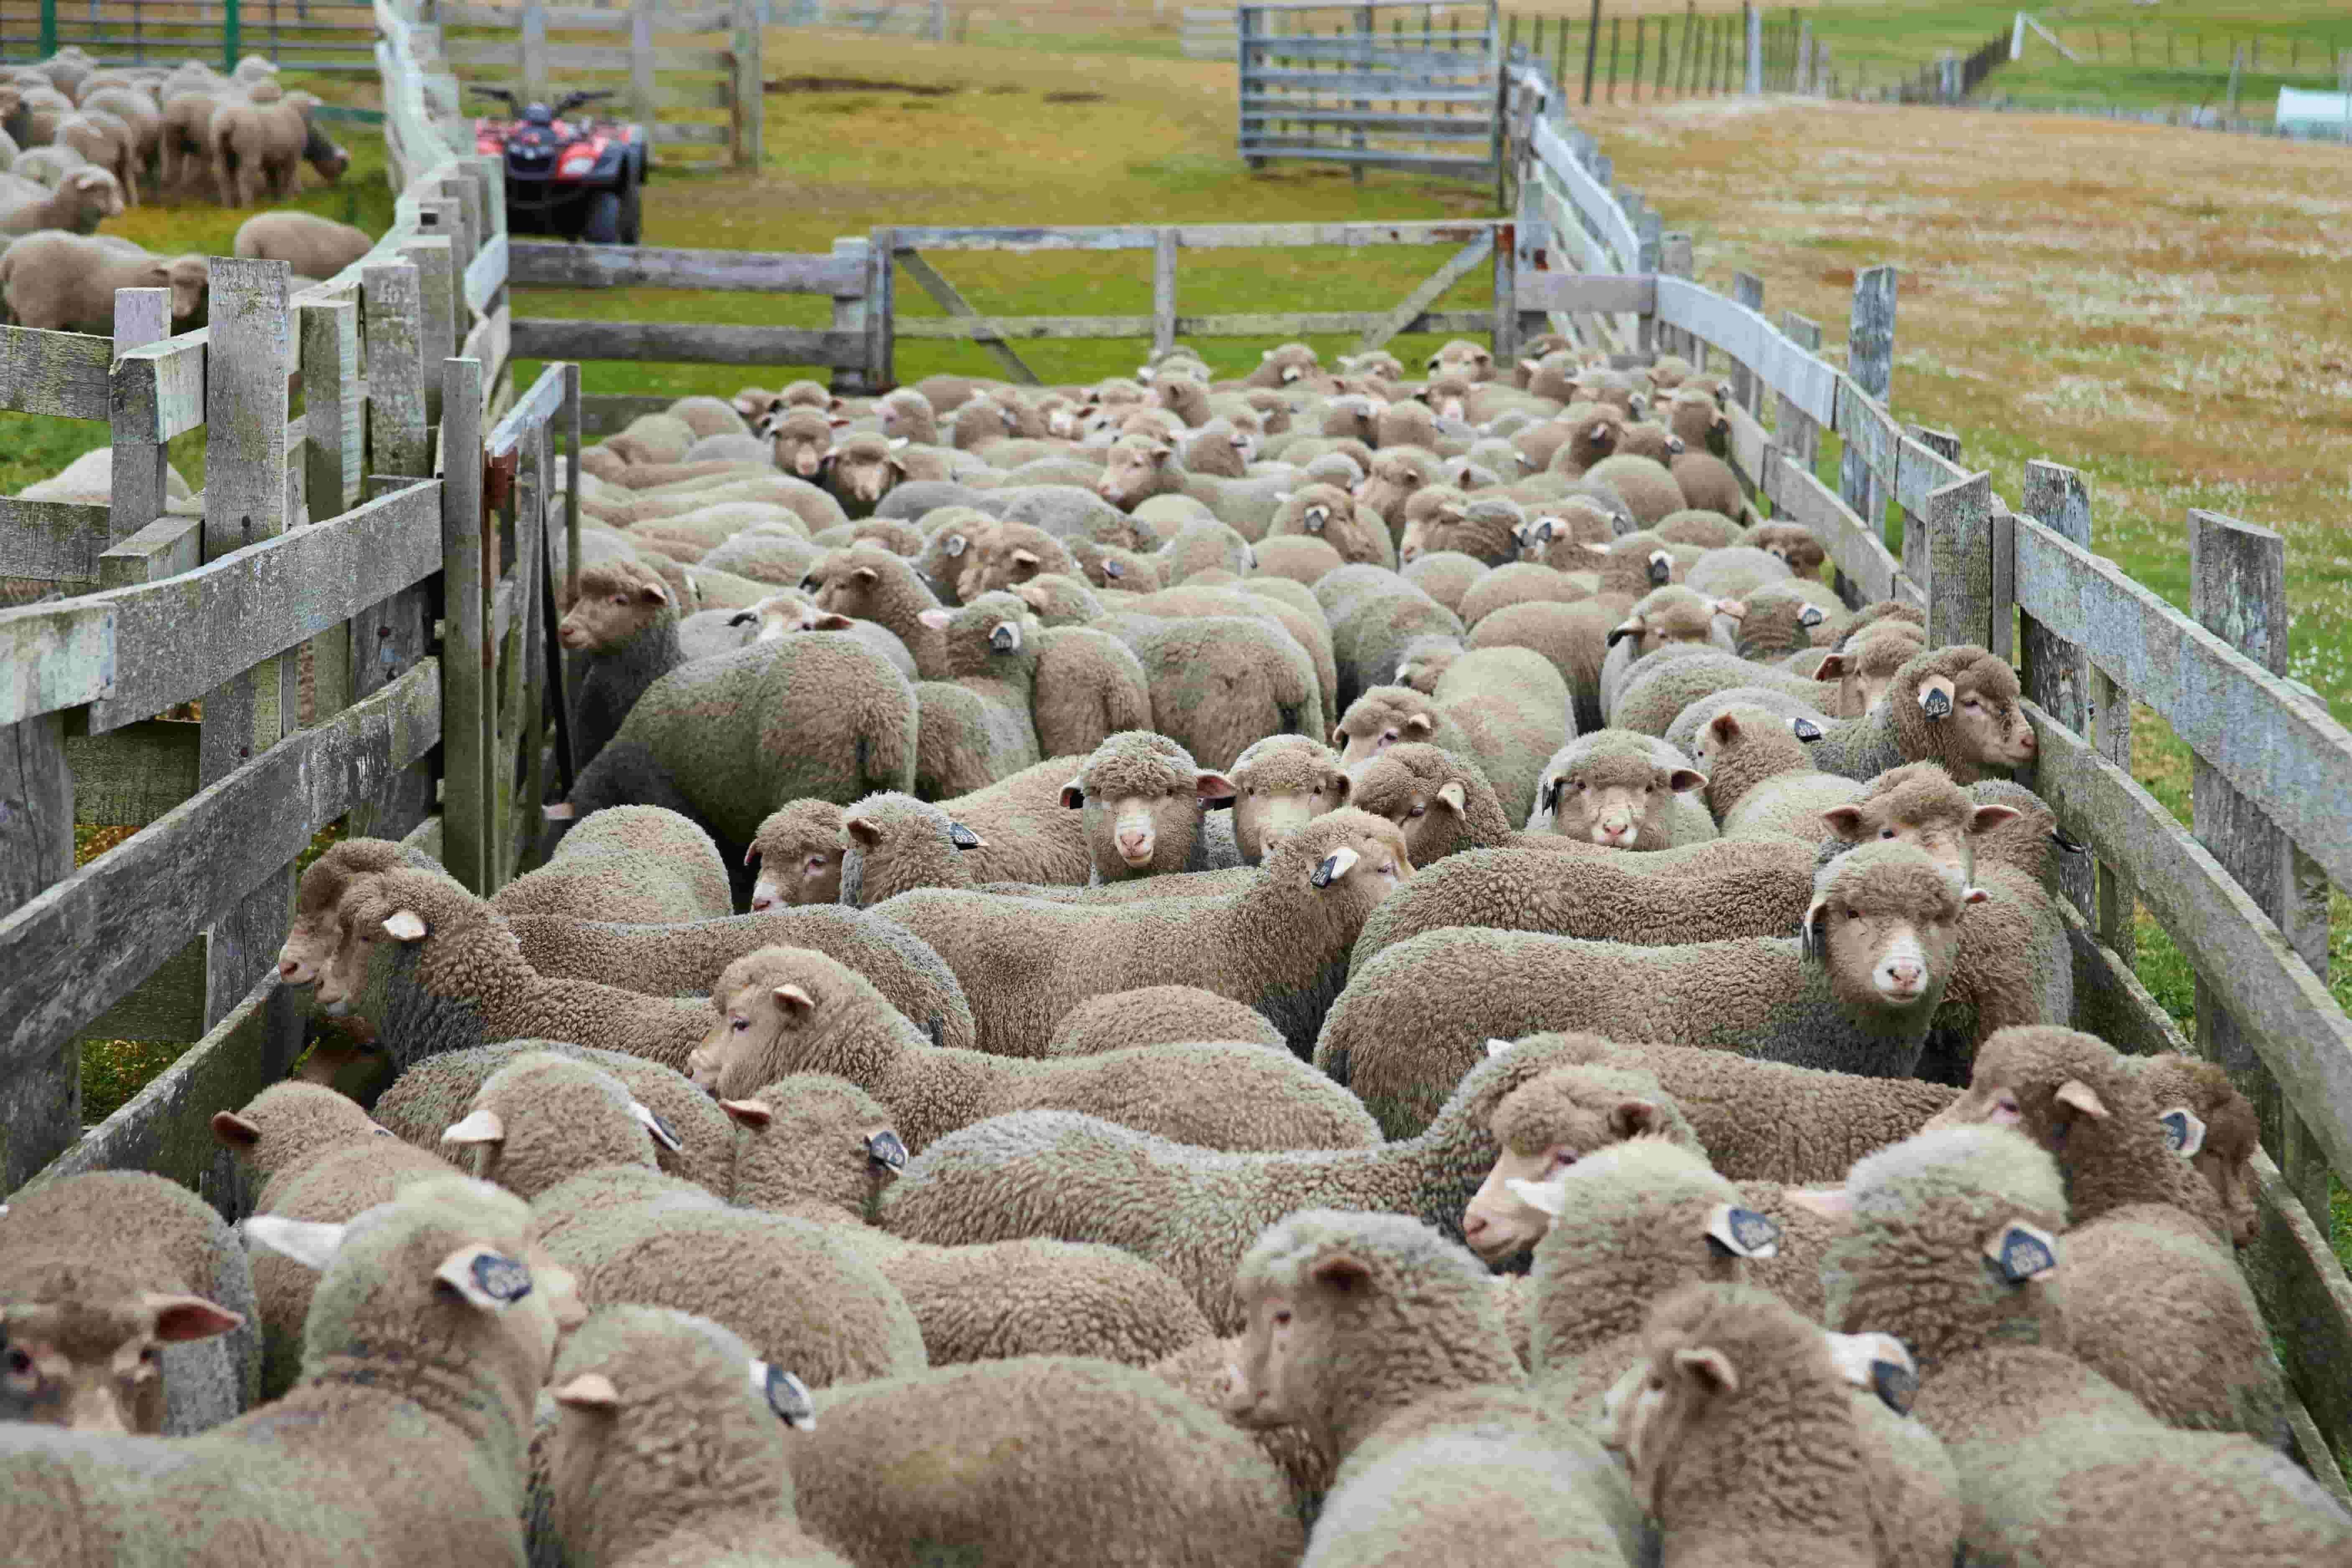 sheep farm to visit near me